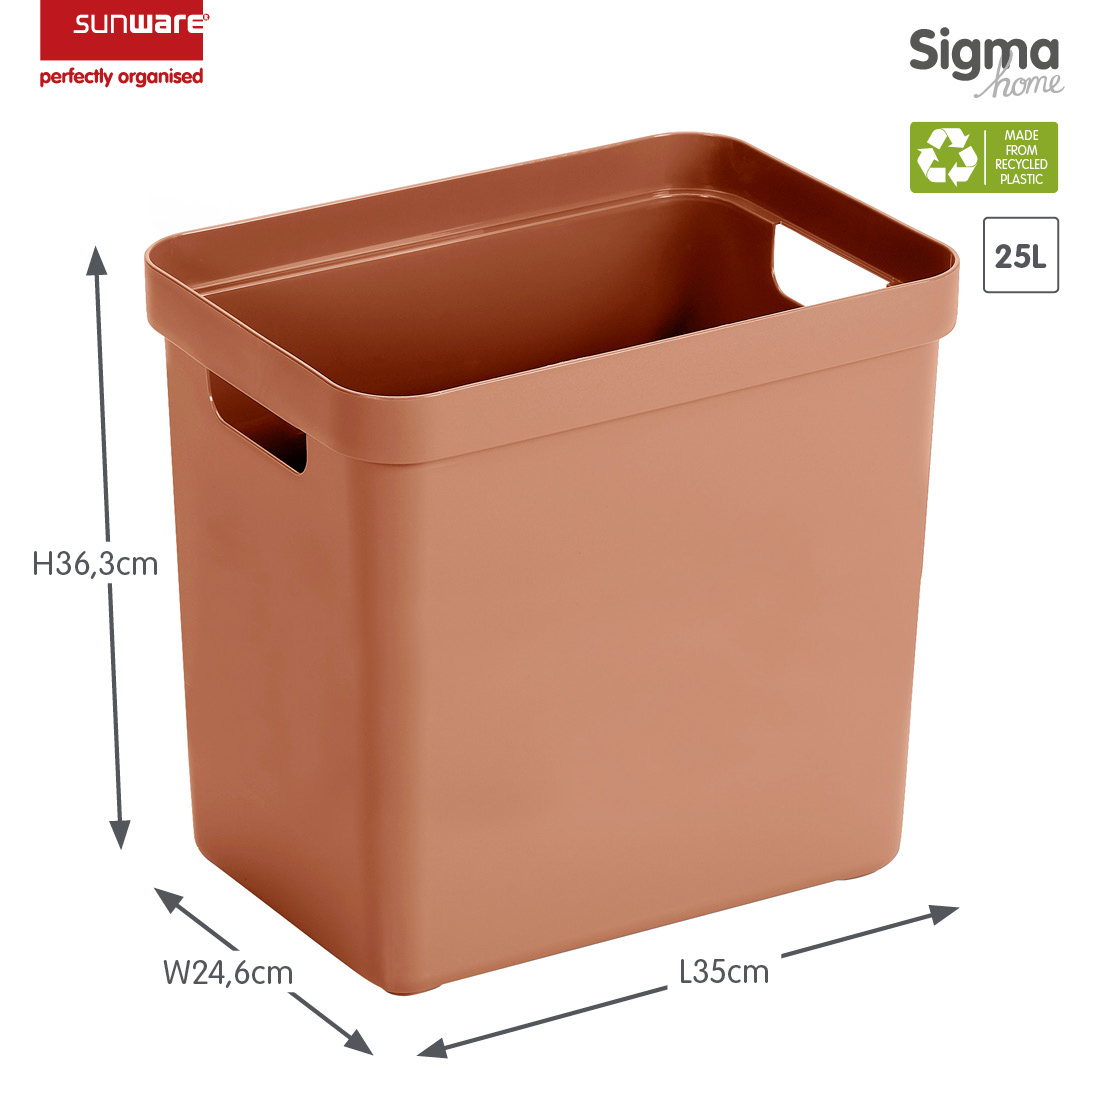 Sigma home storage box 25L terracotta